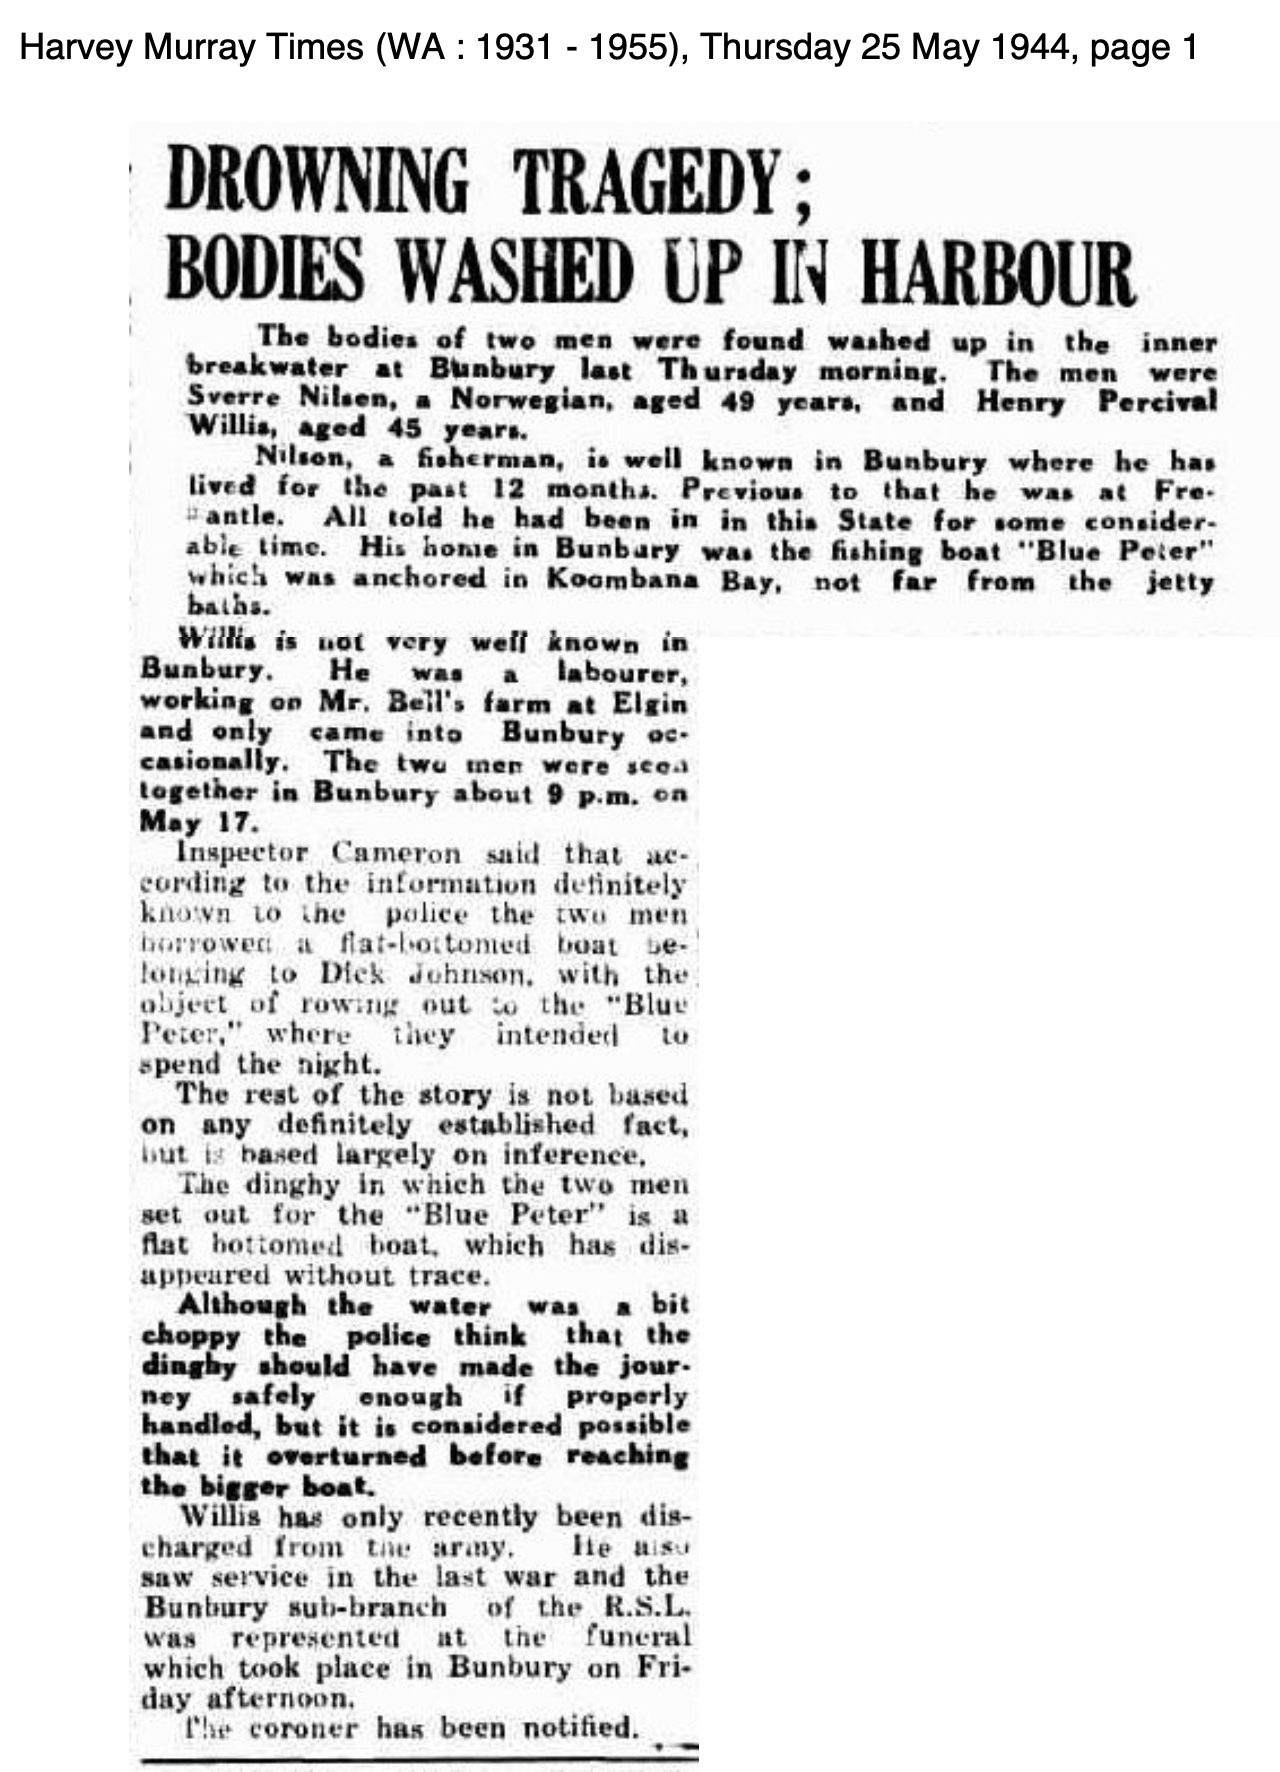 The Harvey Murray Times, Thursday 25 May 1944